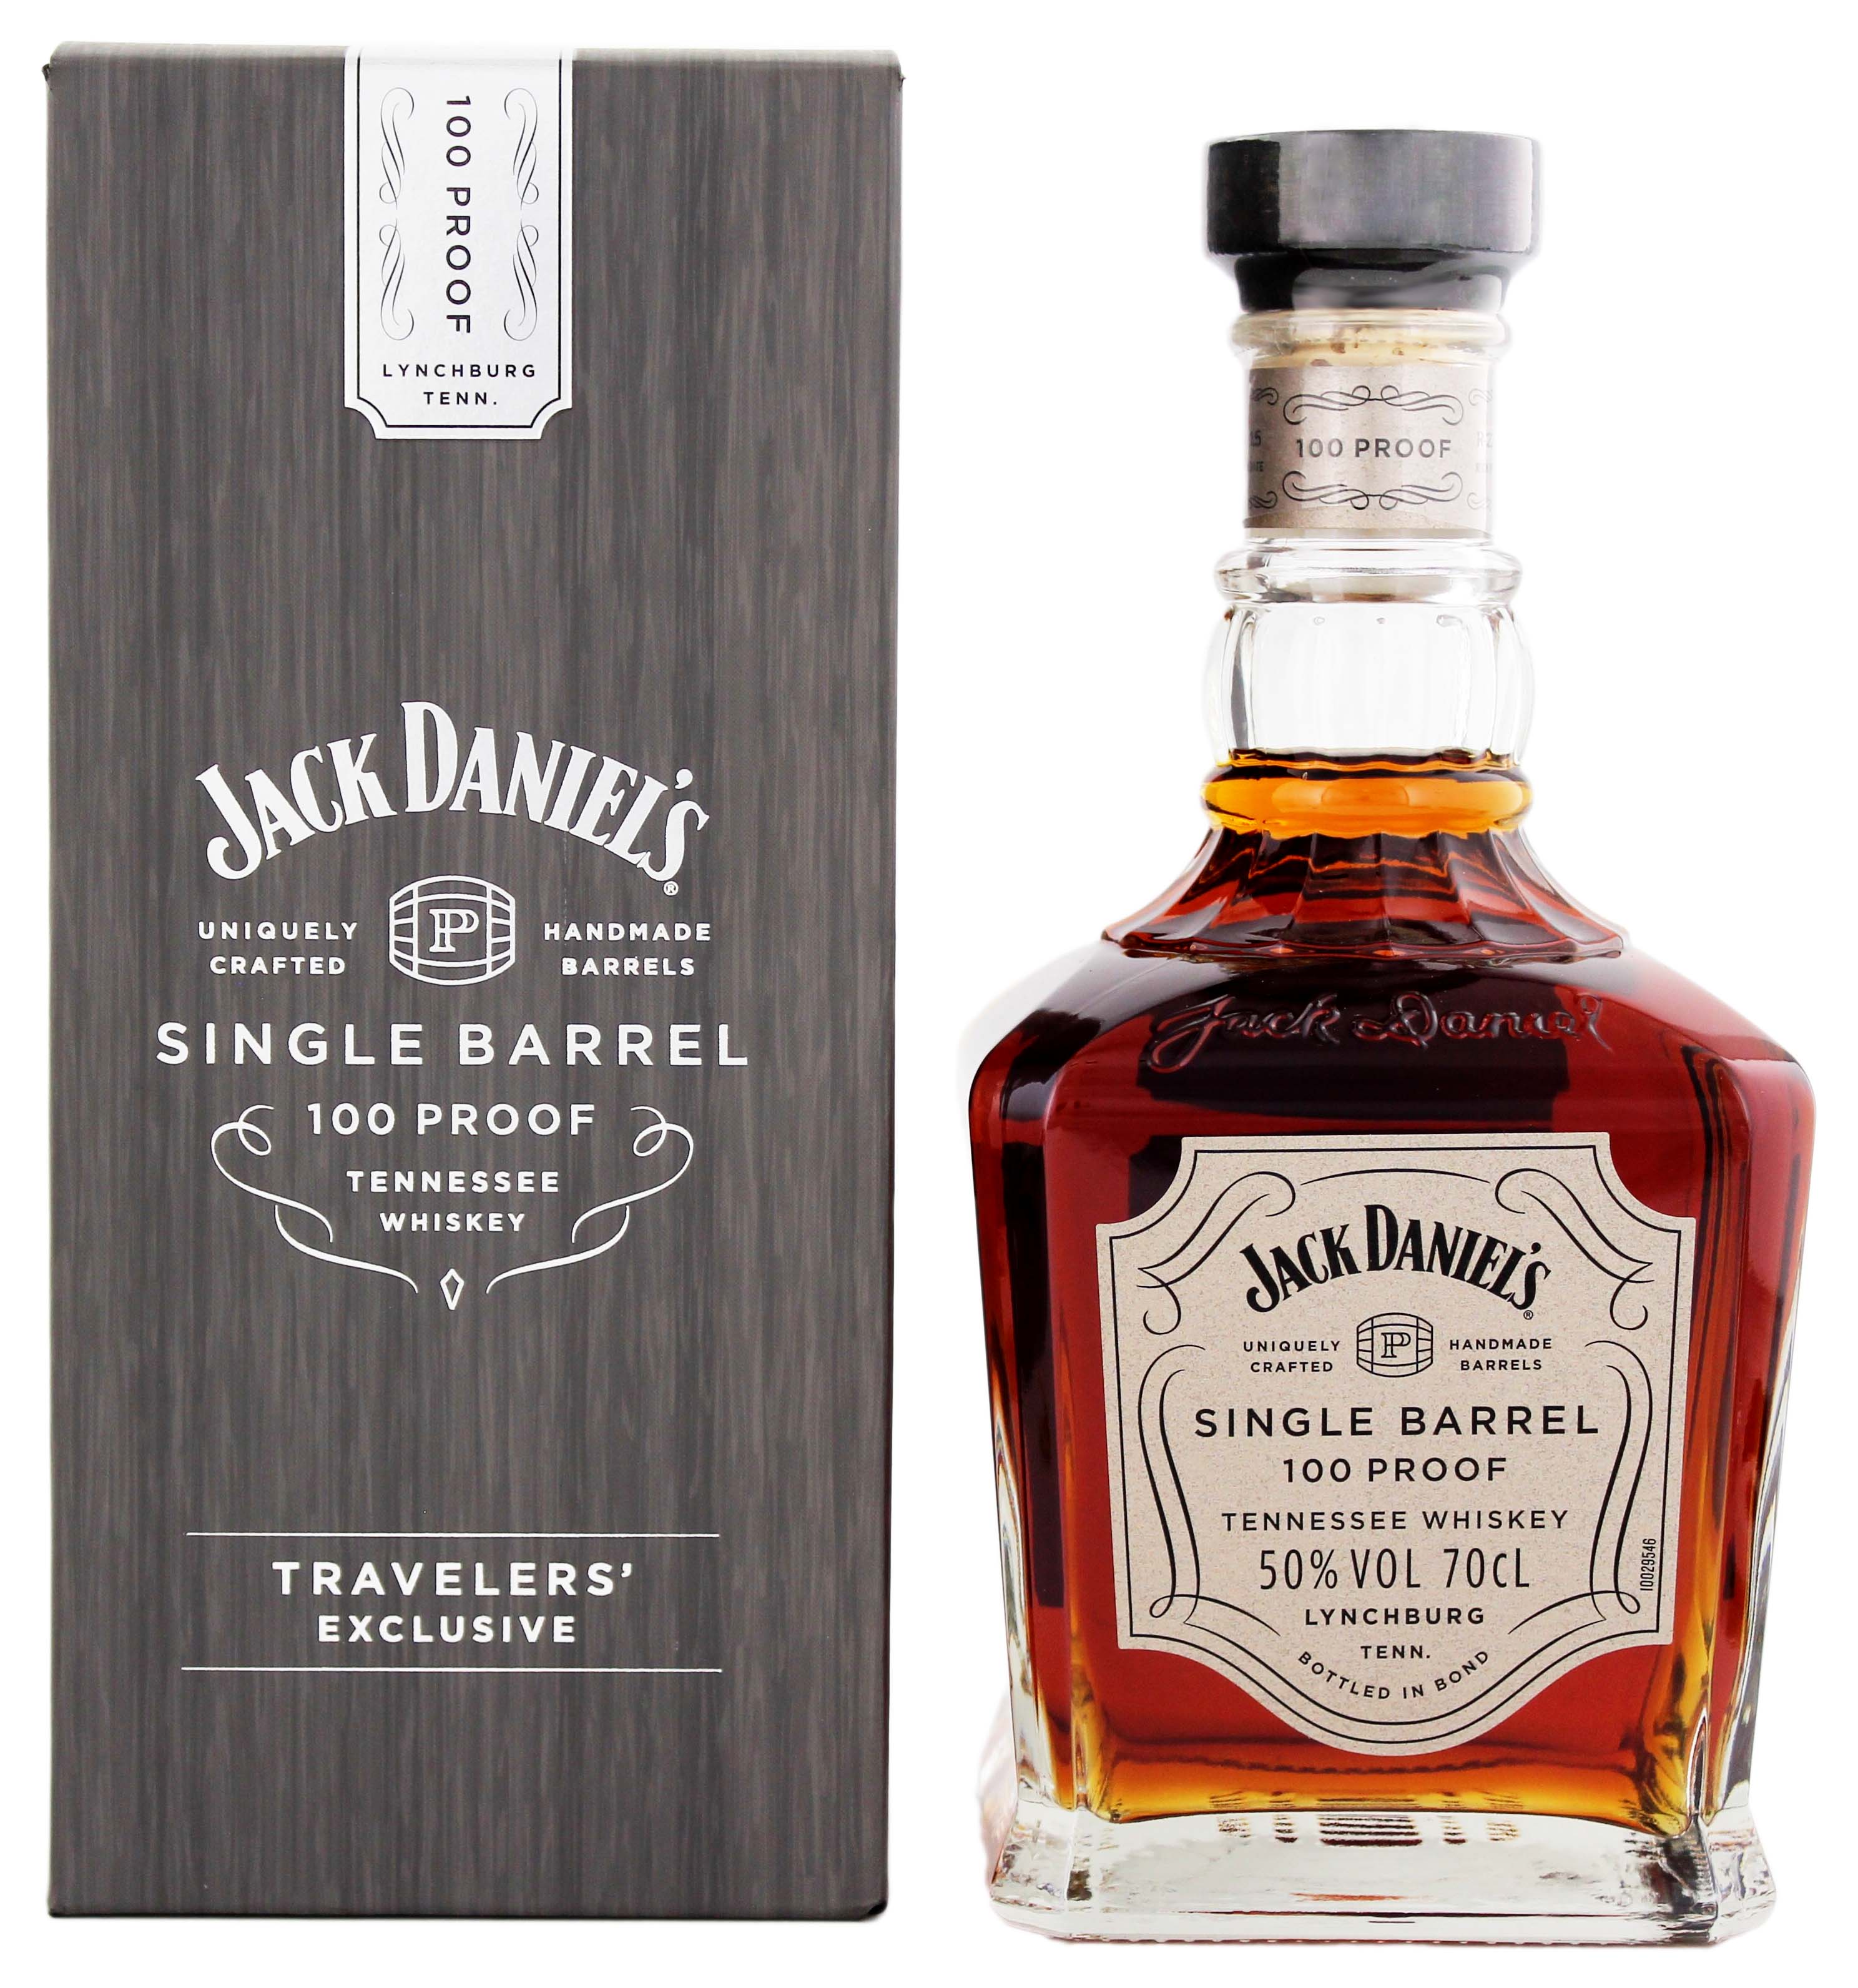 tennessee-whiskey-straight-bourbon-whiskey-drinkology-spirituosen-shop